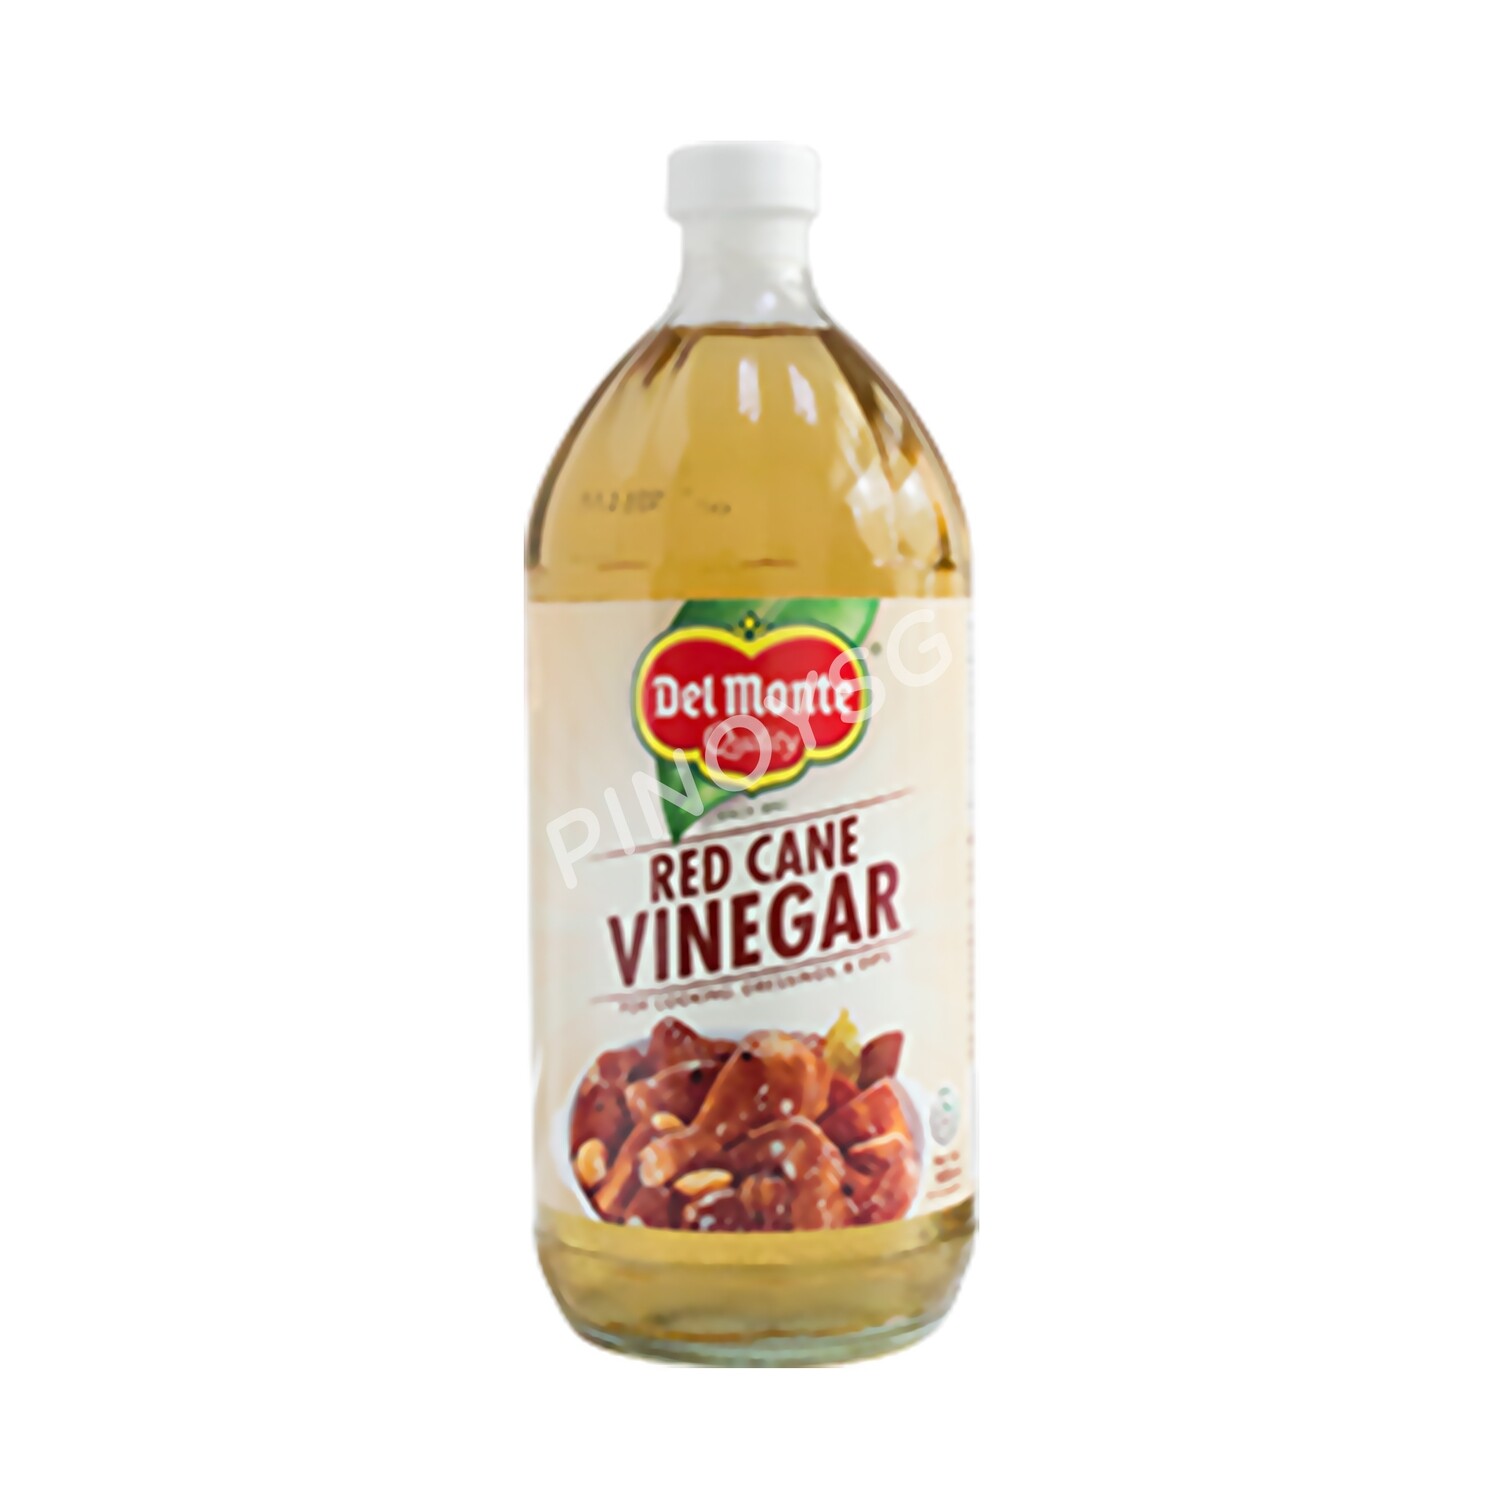 Del Monte Red Cane Vinegar 47cl